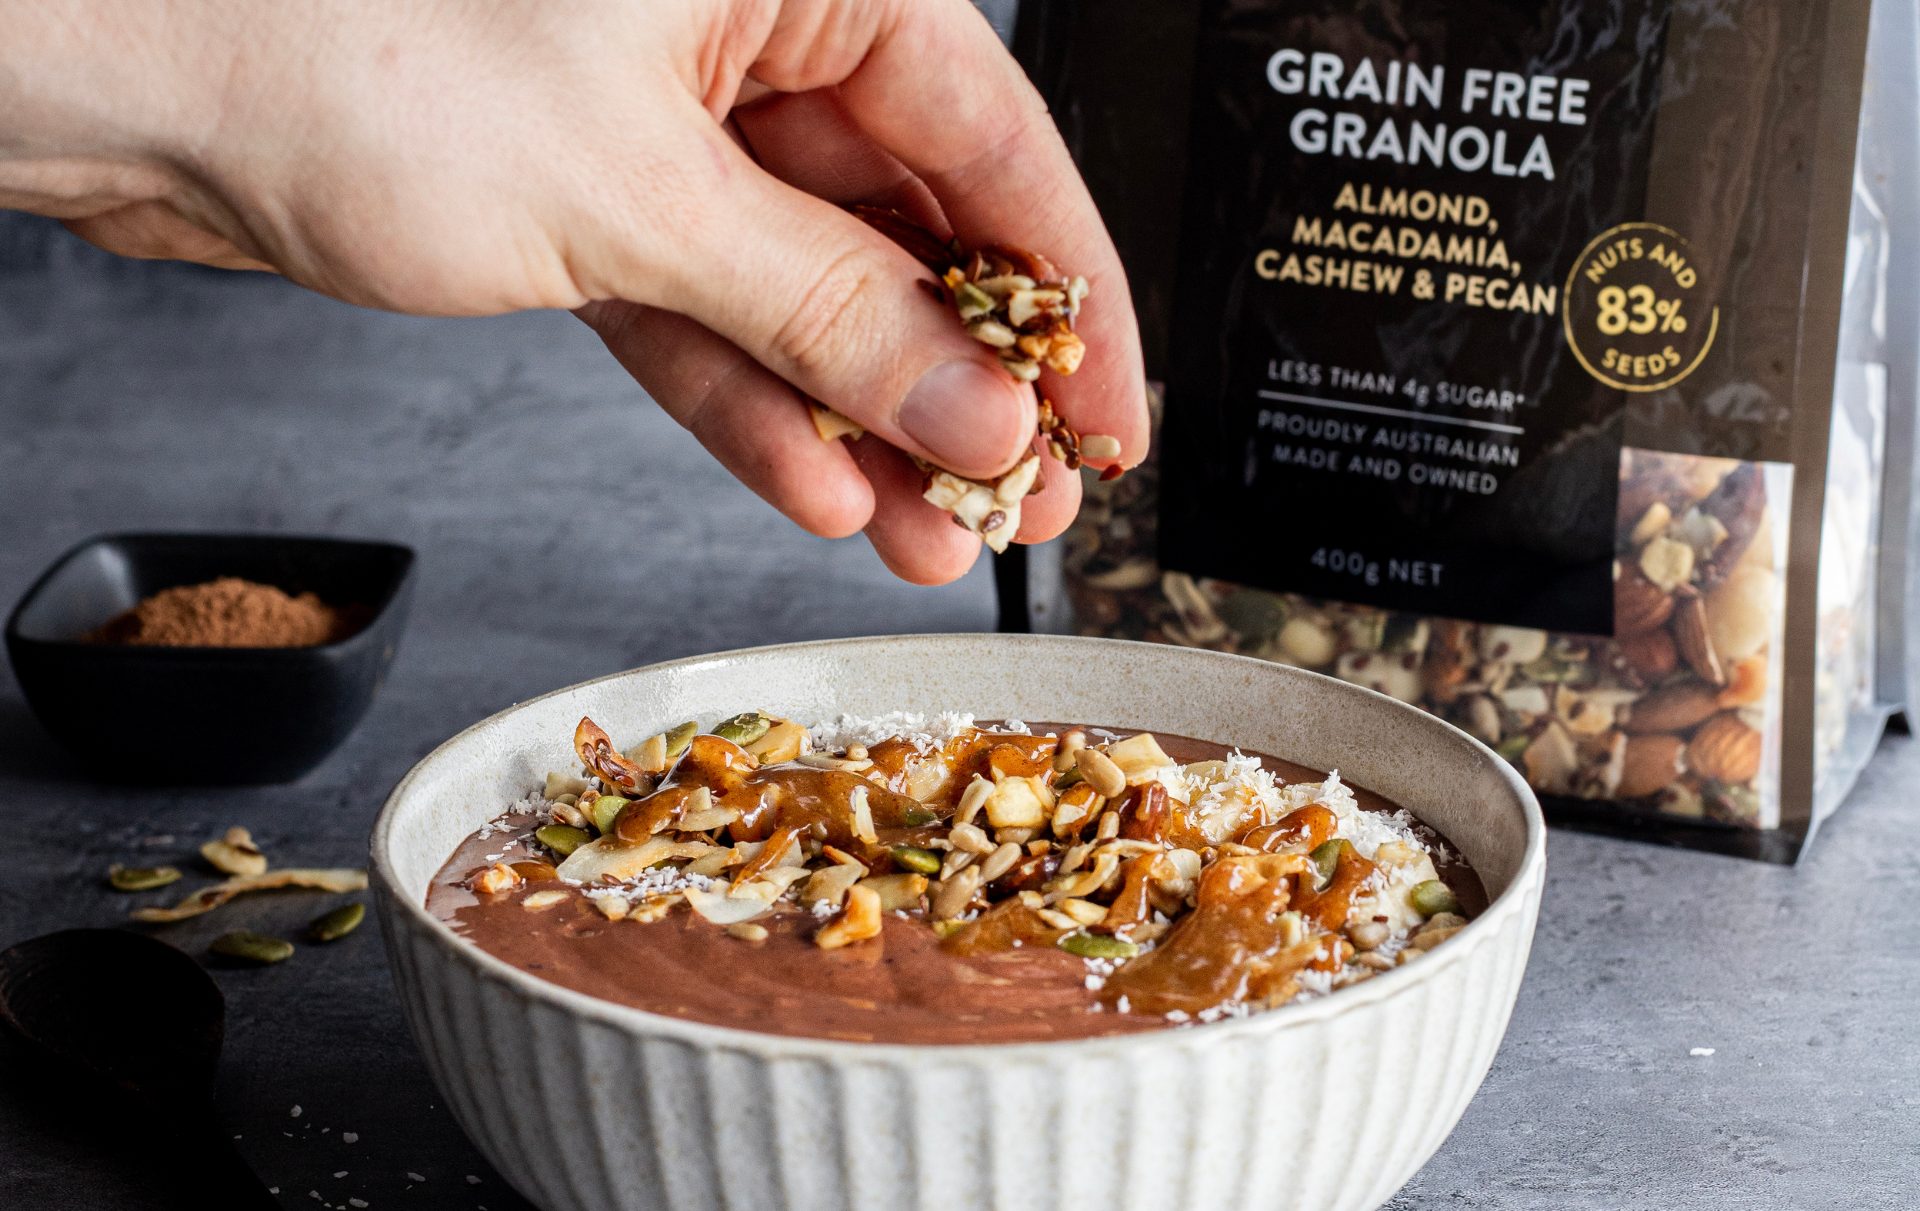 Choc smoothie bowl with grain-free granola